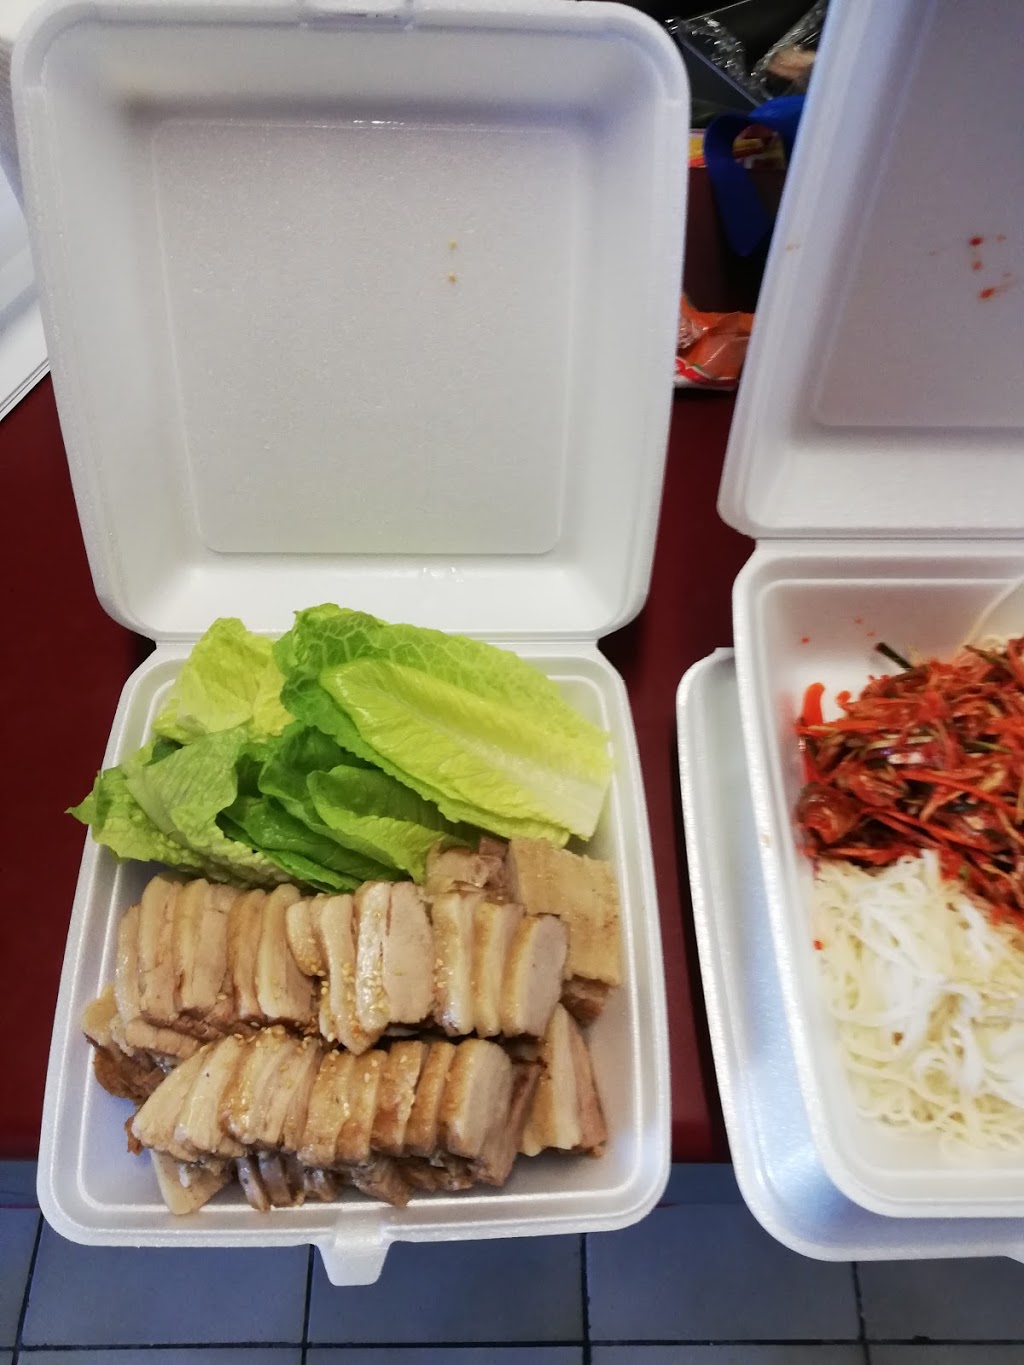 Banchan-All About Korean Food | 160 Hampstead Rd, Broadview SA 5083, Australia | Phone: 0405 540 009